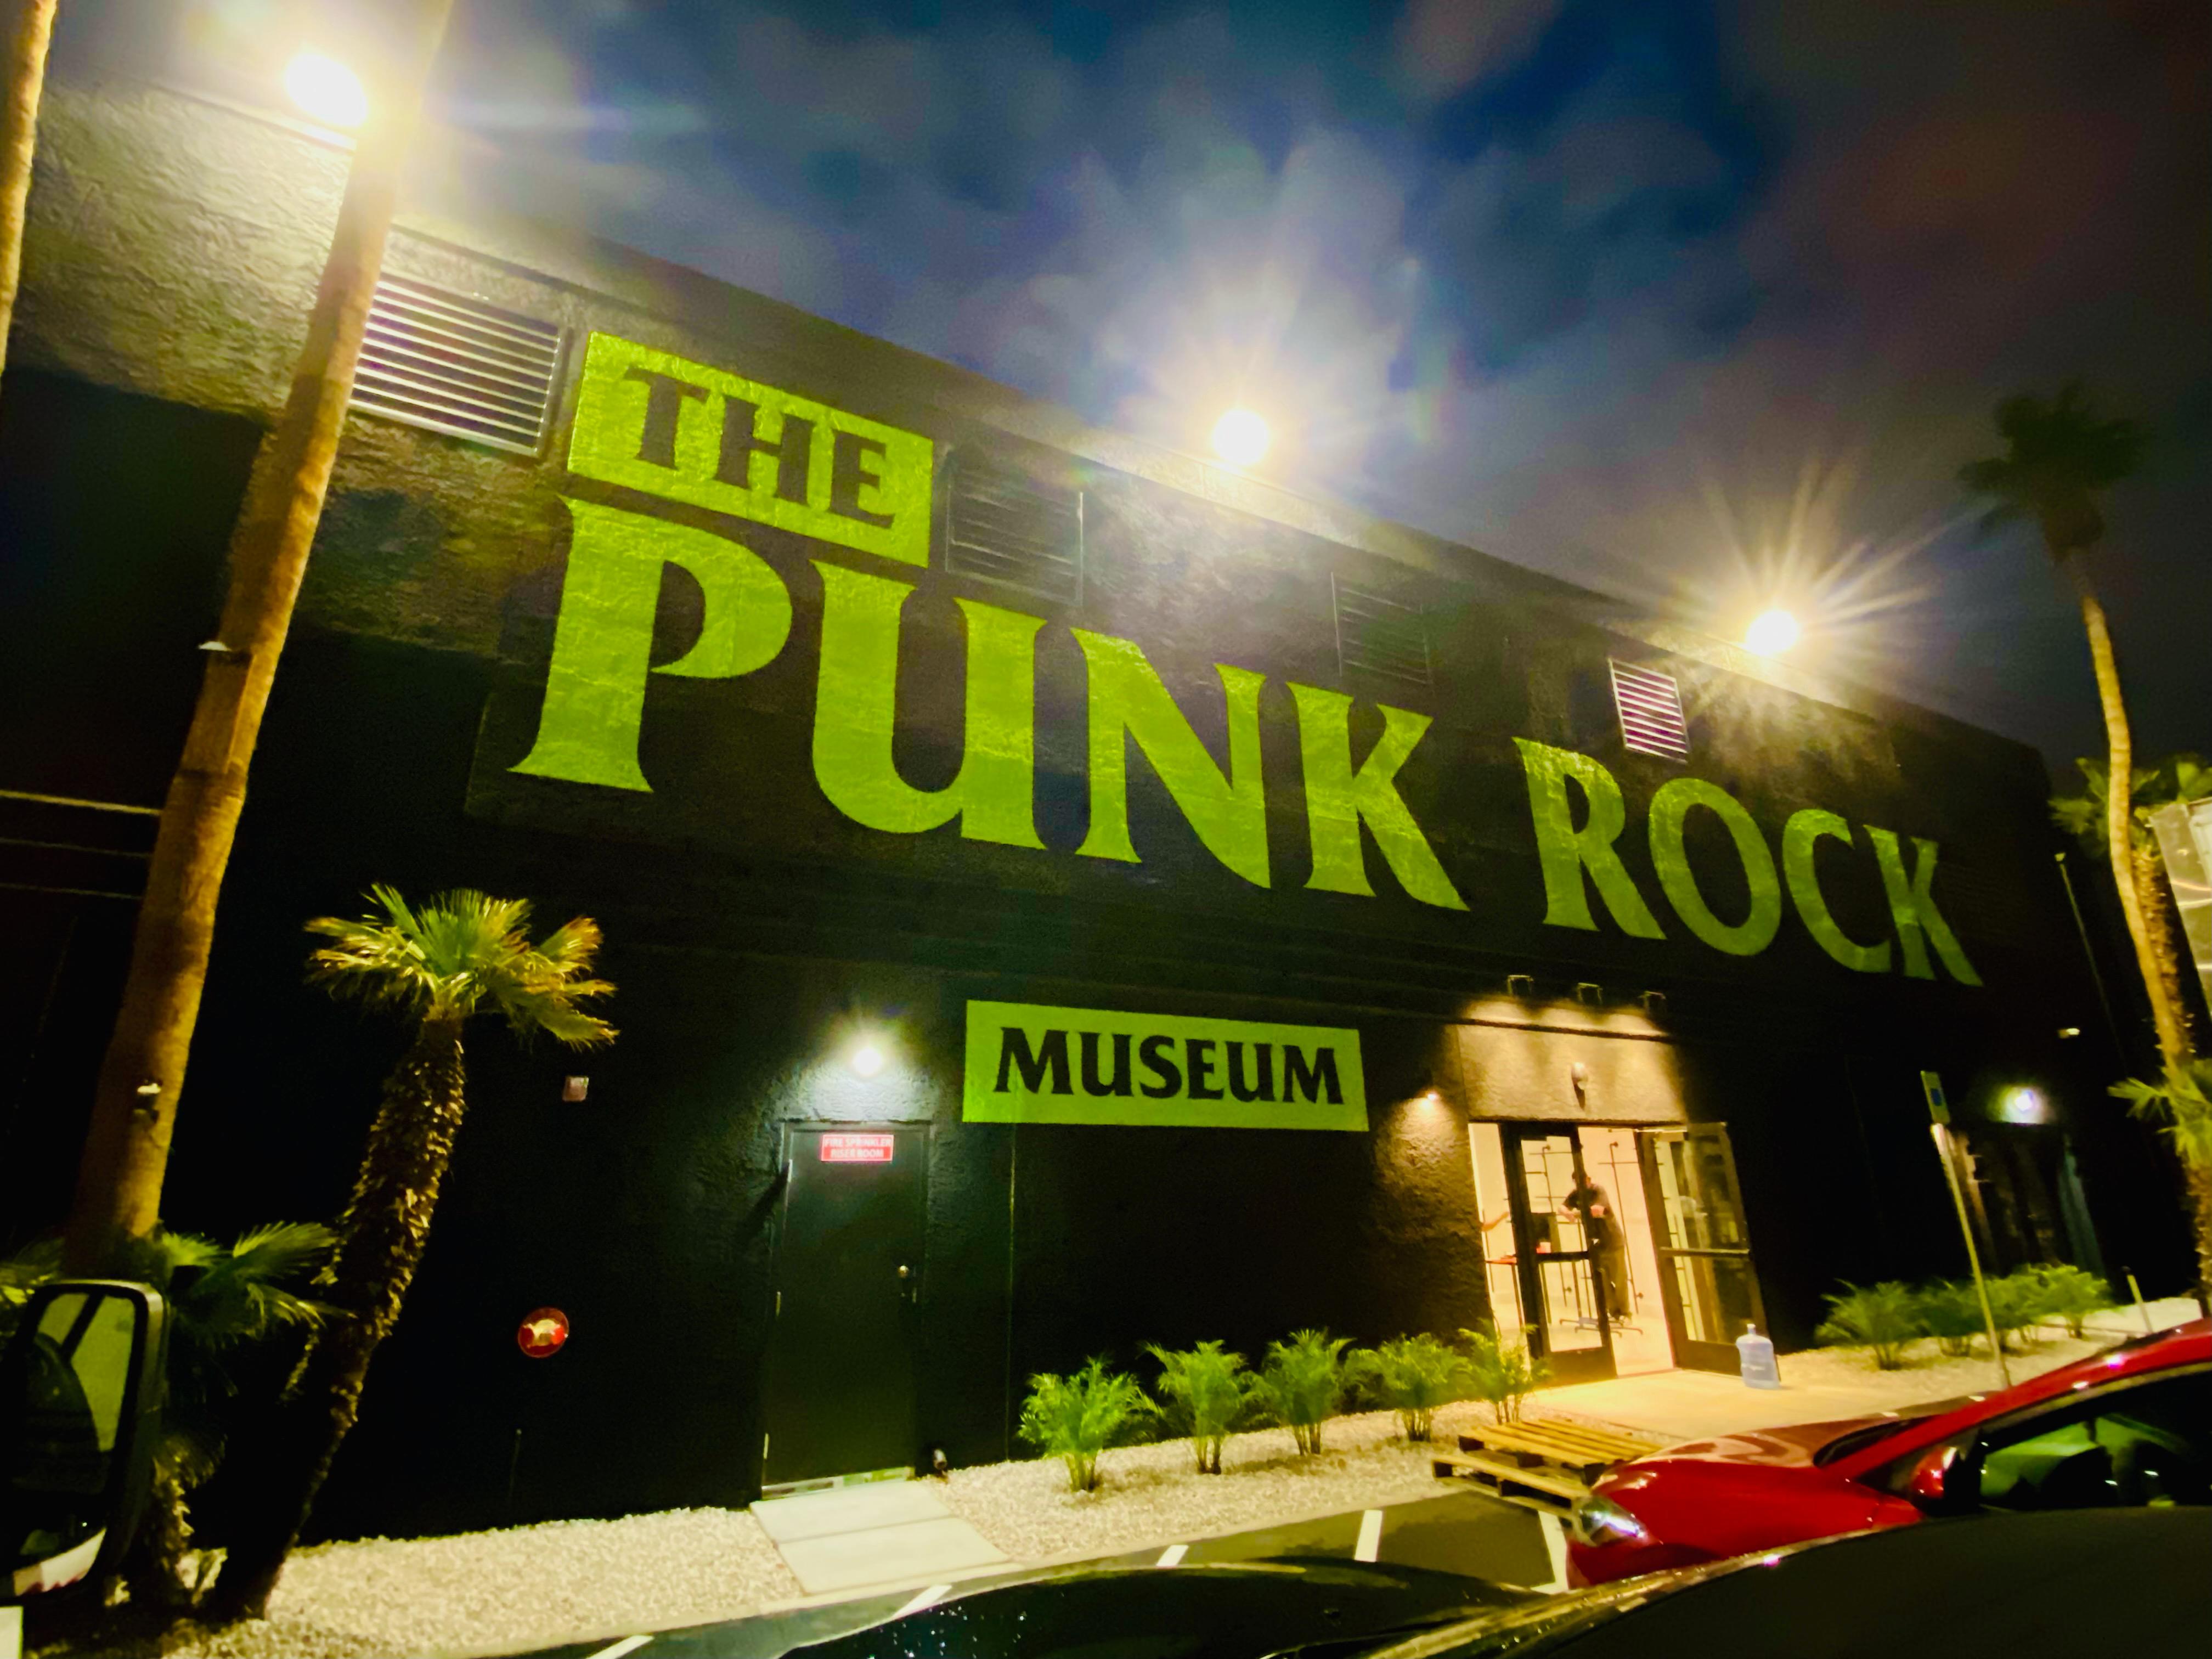 The Punk Rock Museum